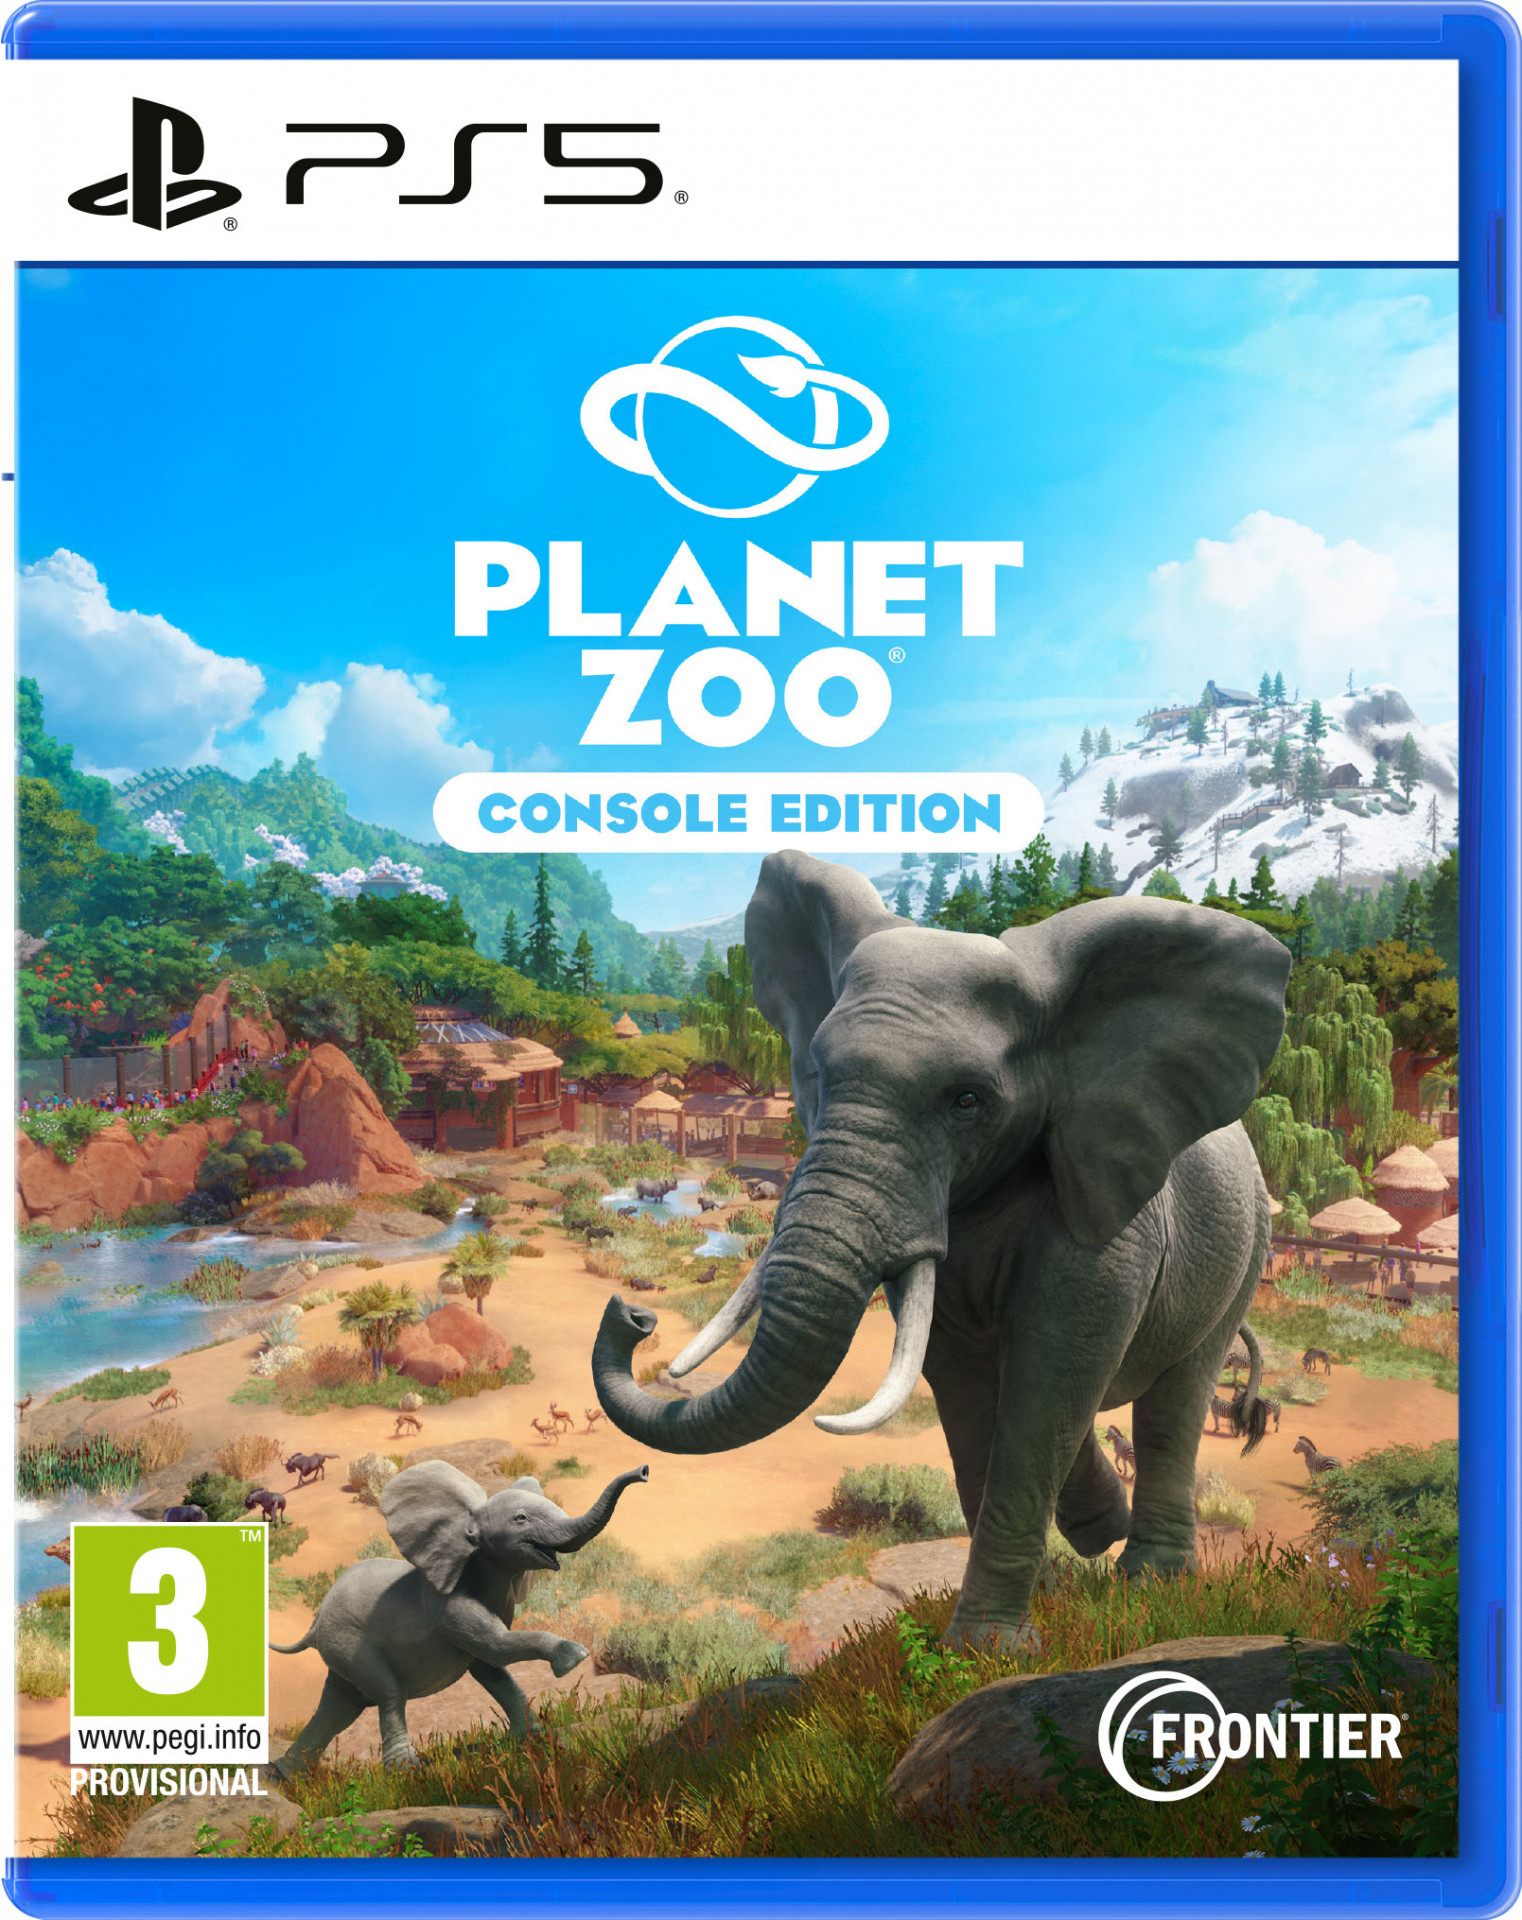 Plaion Planet Zoo - Console Edition